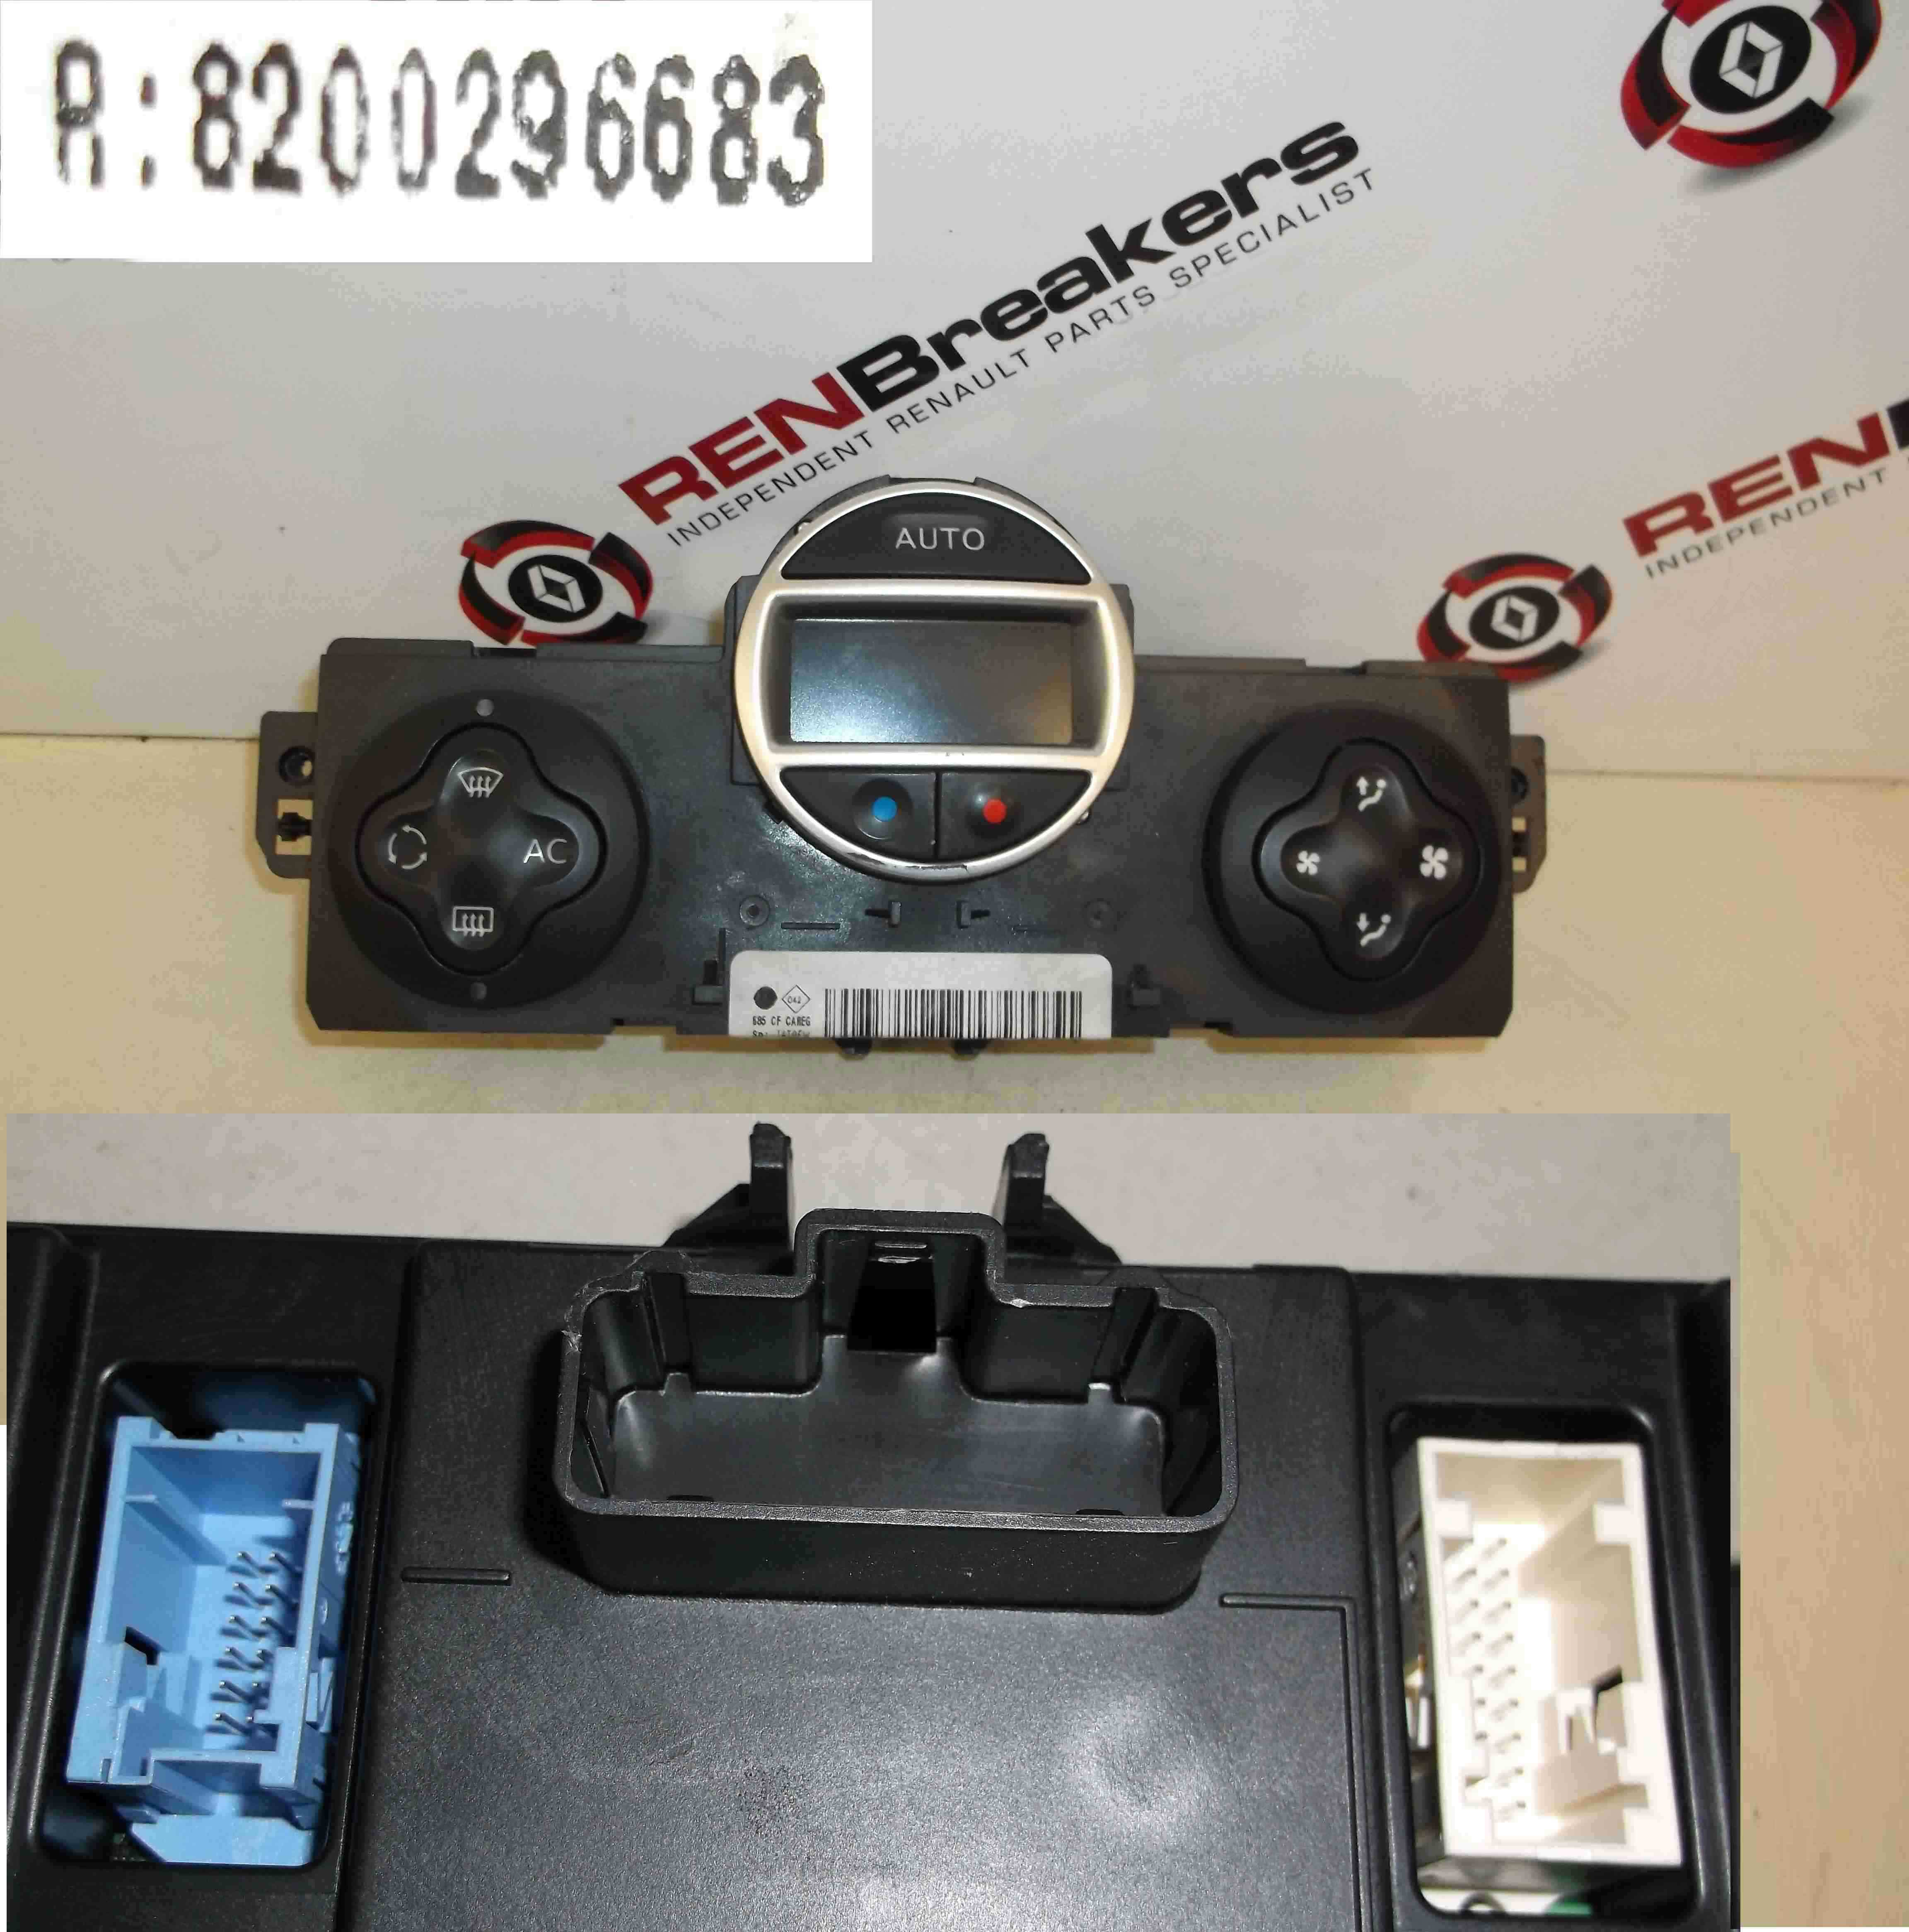 Renault Clio Sport 2009-2012 200 Heater Controls Dials Digital Aircon 8200296683